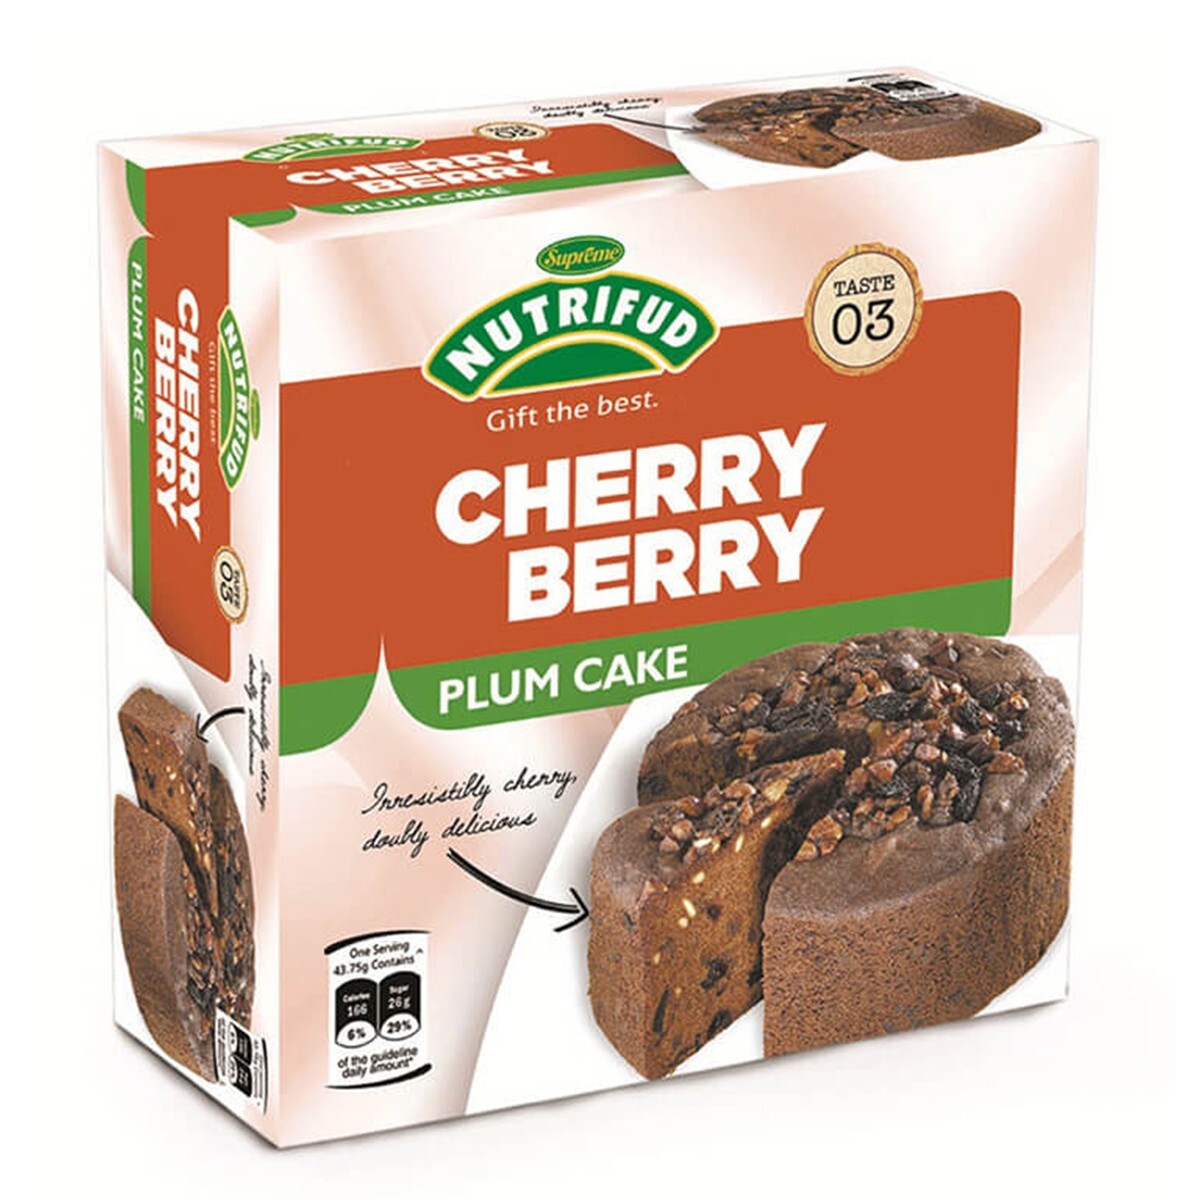 Nutrifud Cherry Berry 650g